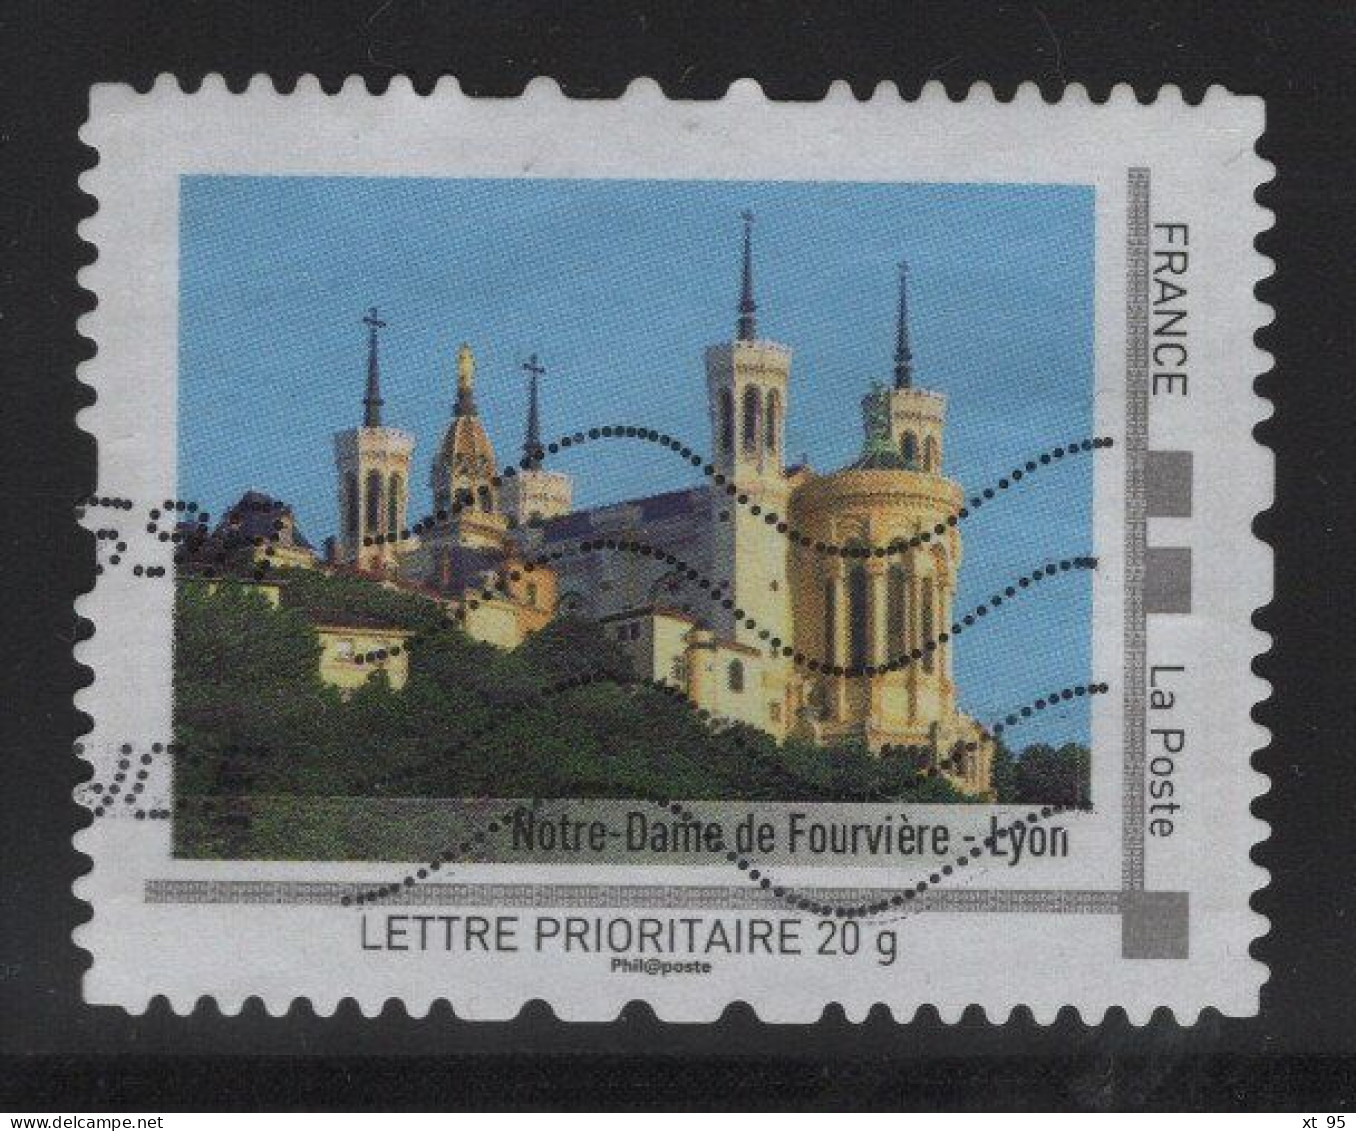 Timbre Personnalise Oblitere - Lettre Prioritaire 20g - Notre Dame De Fourviere - Lyon - Used Stamps